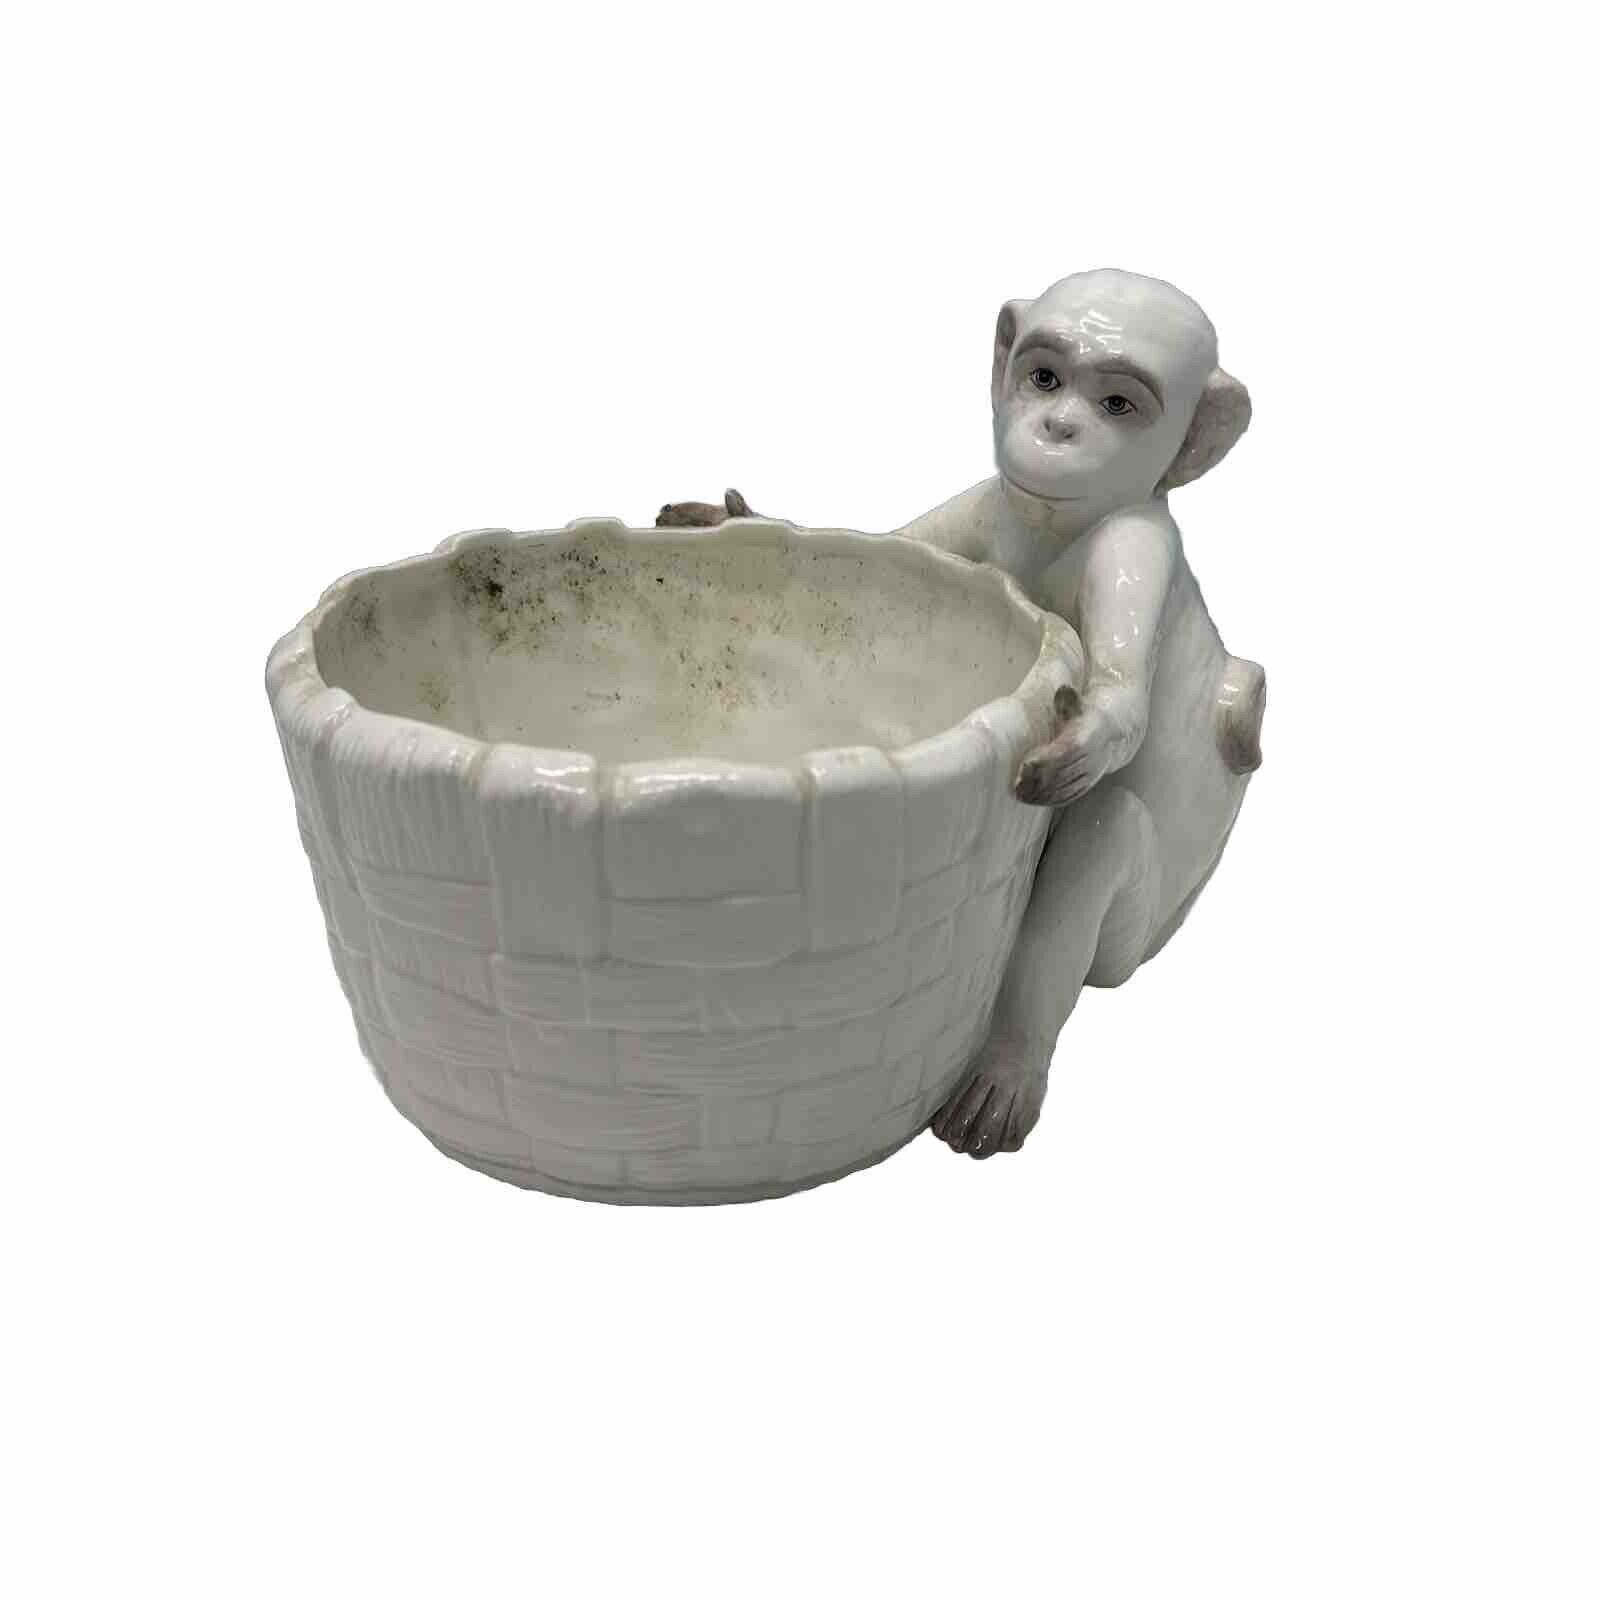 Abigail\'s Ceramic Italy White Monkey Flower Pot 12x8.5x8 inches (preowned)